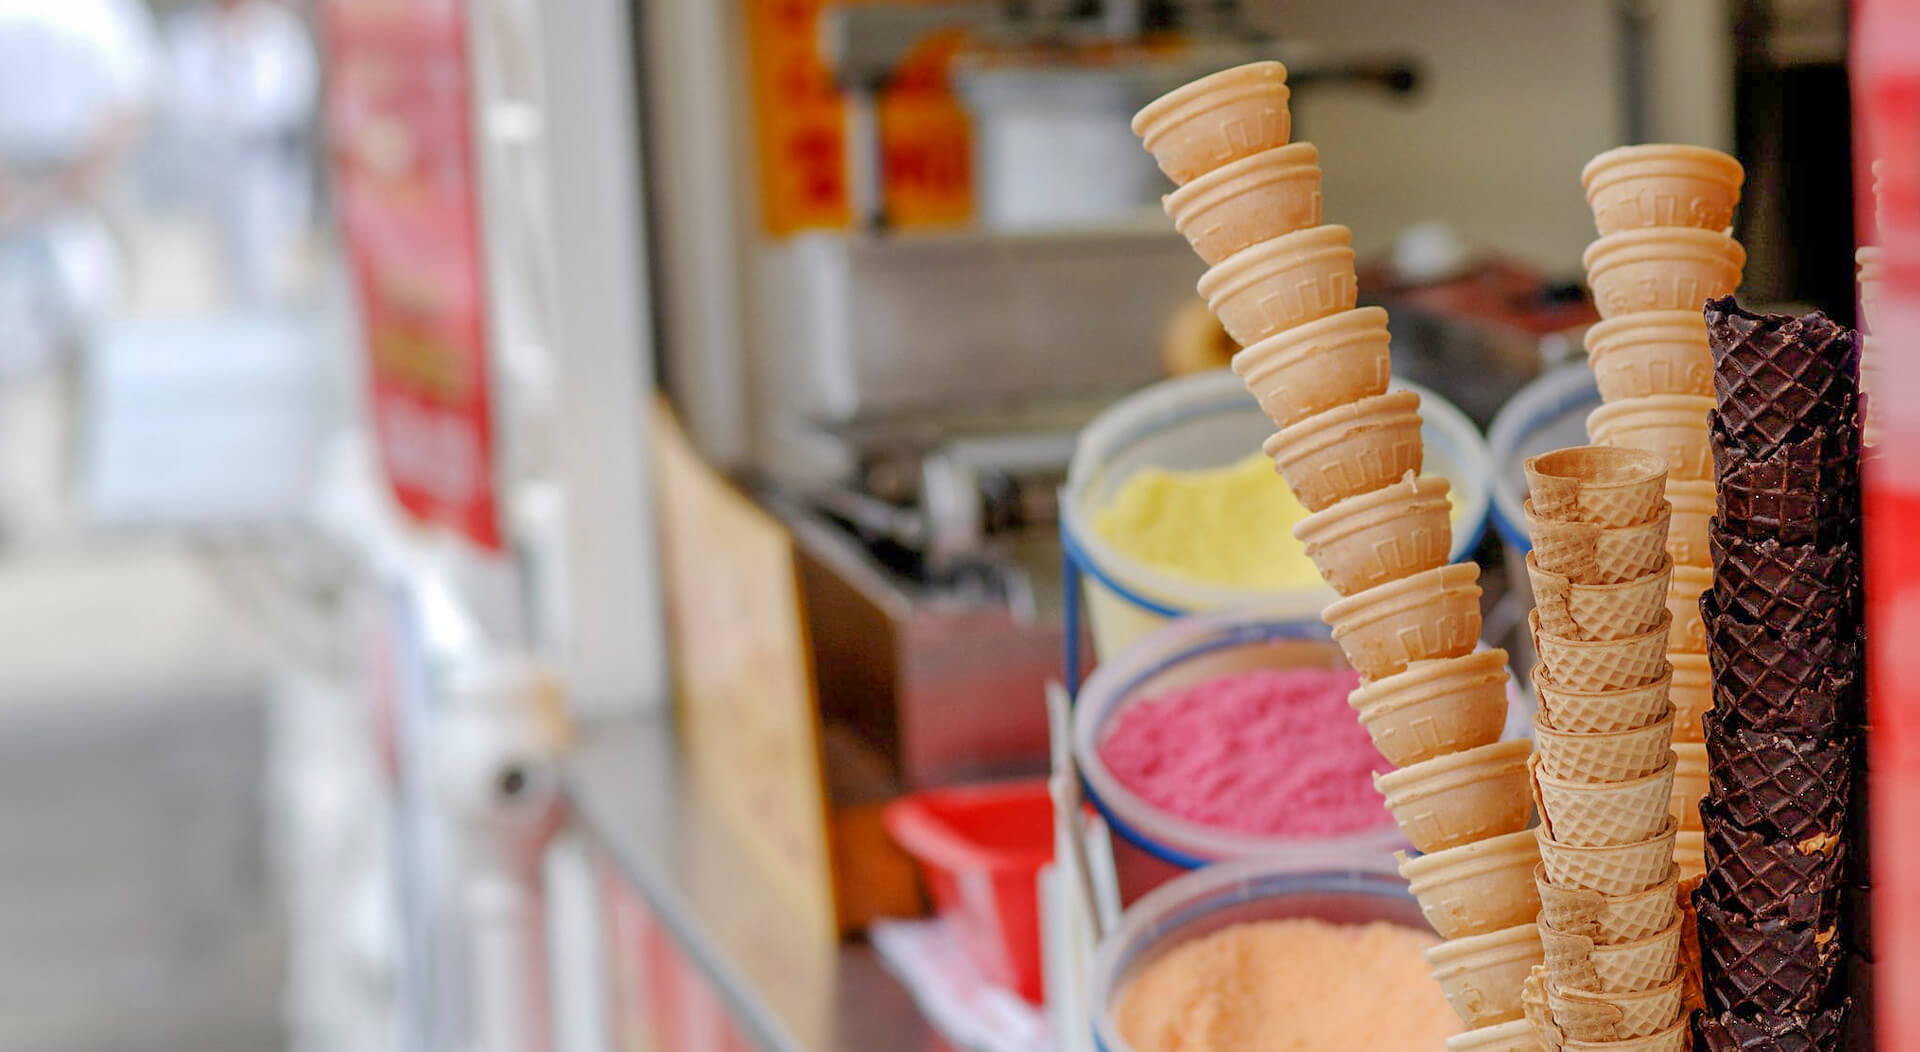 ice cream cones displayed in an ice cream van